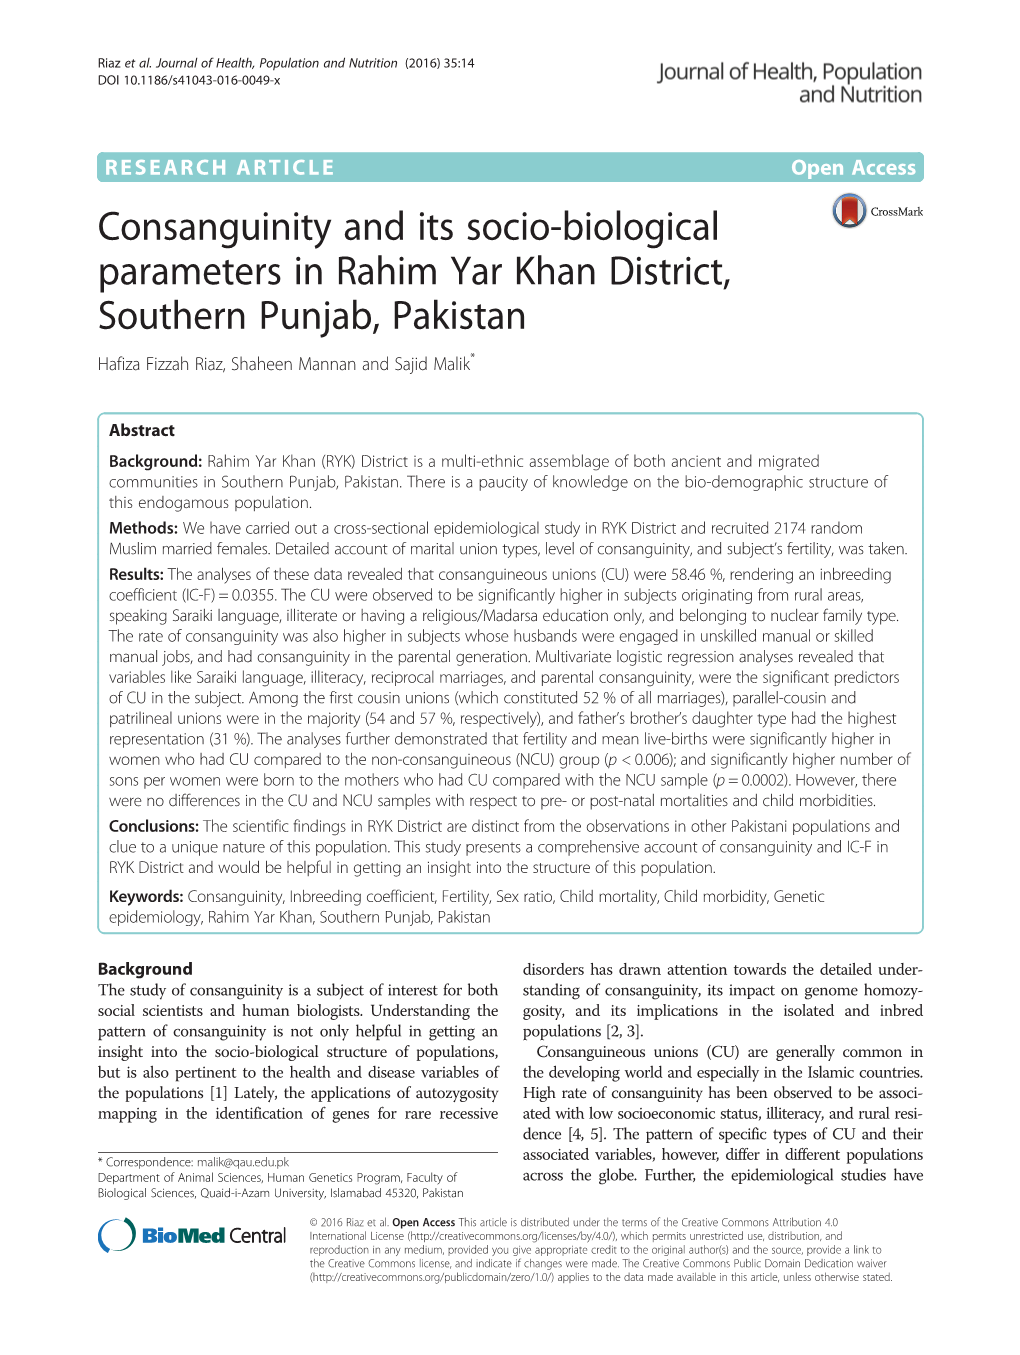 Consanguinity and Its Socio-Biological Parameters in Rahim Yar Khan District, Southern Punjab, Pakistan Hafiza Fizzah Riaz, Shaheen Mannan and Sajid Malik*